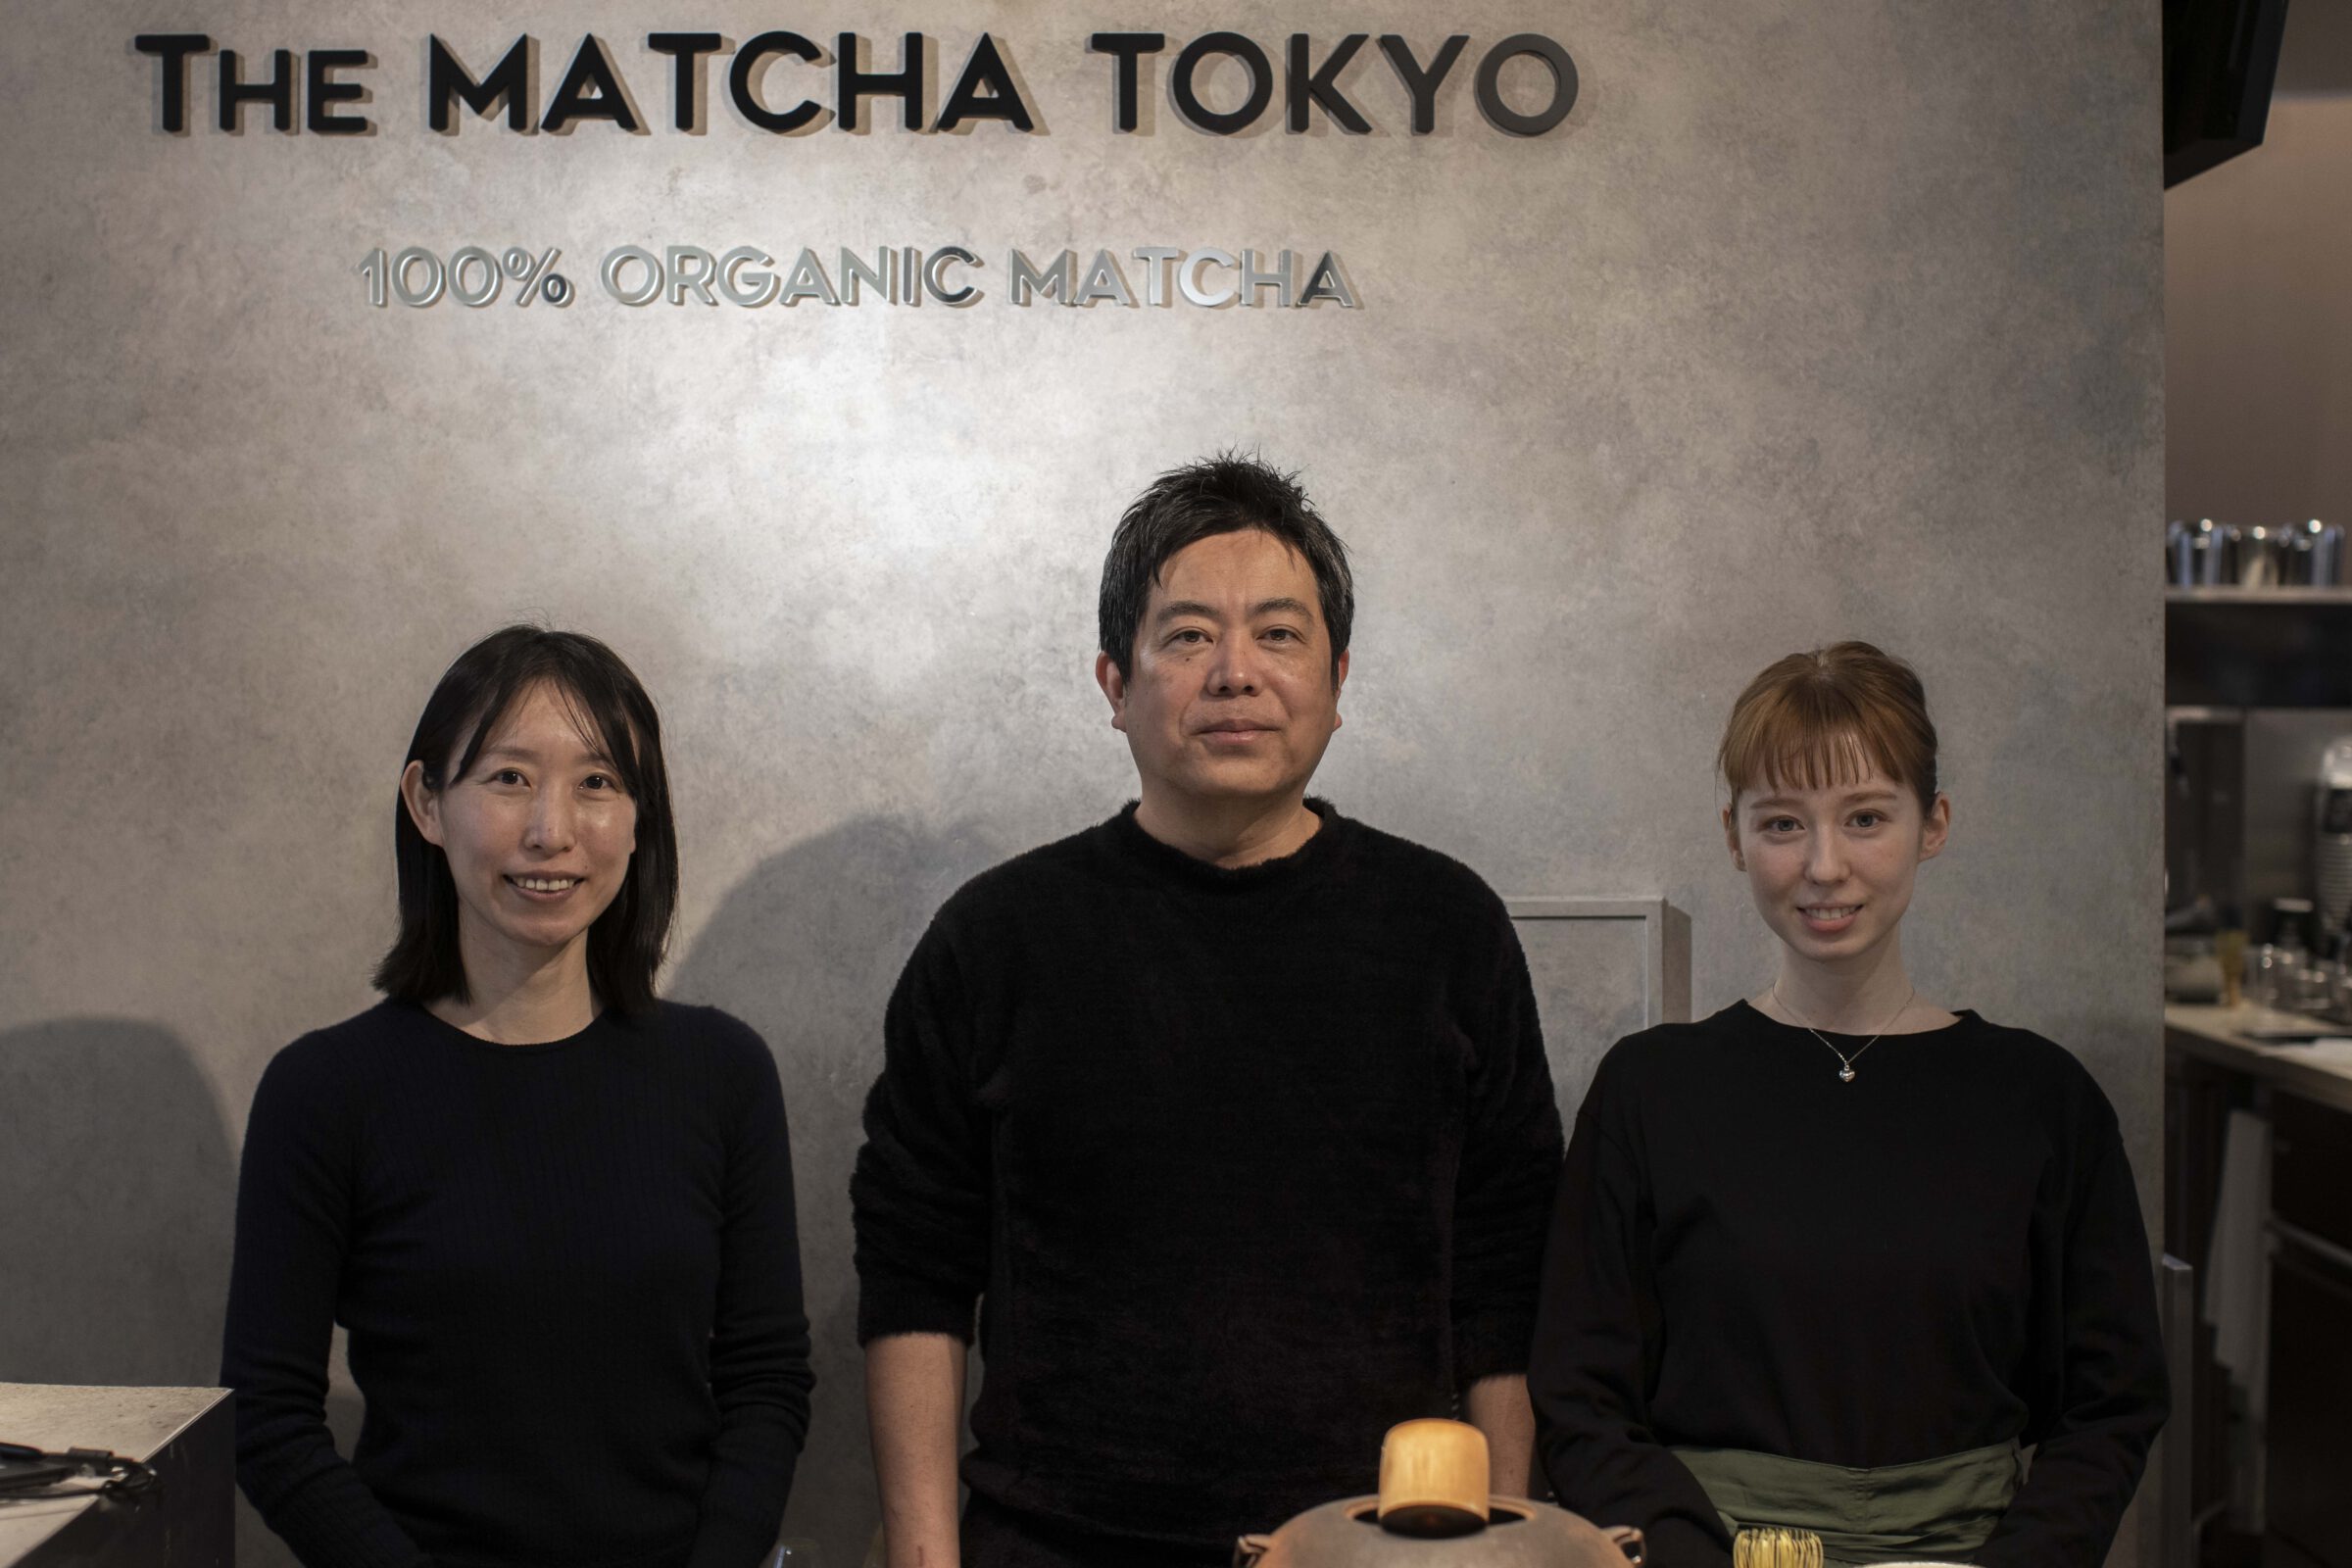 THE MATCHA TOKYO – THE MATCHA TOKYO ONLINE STORE